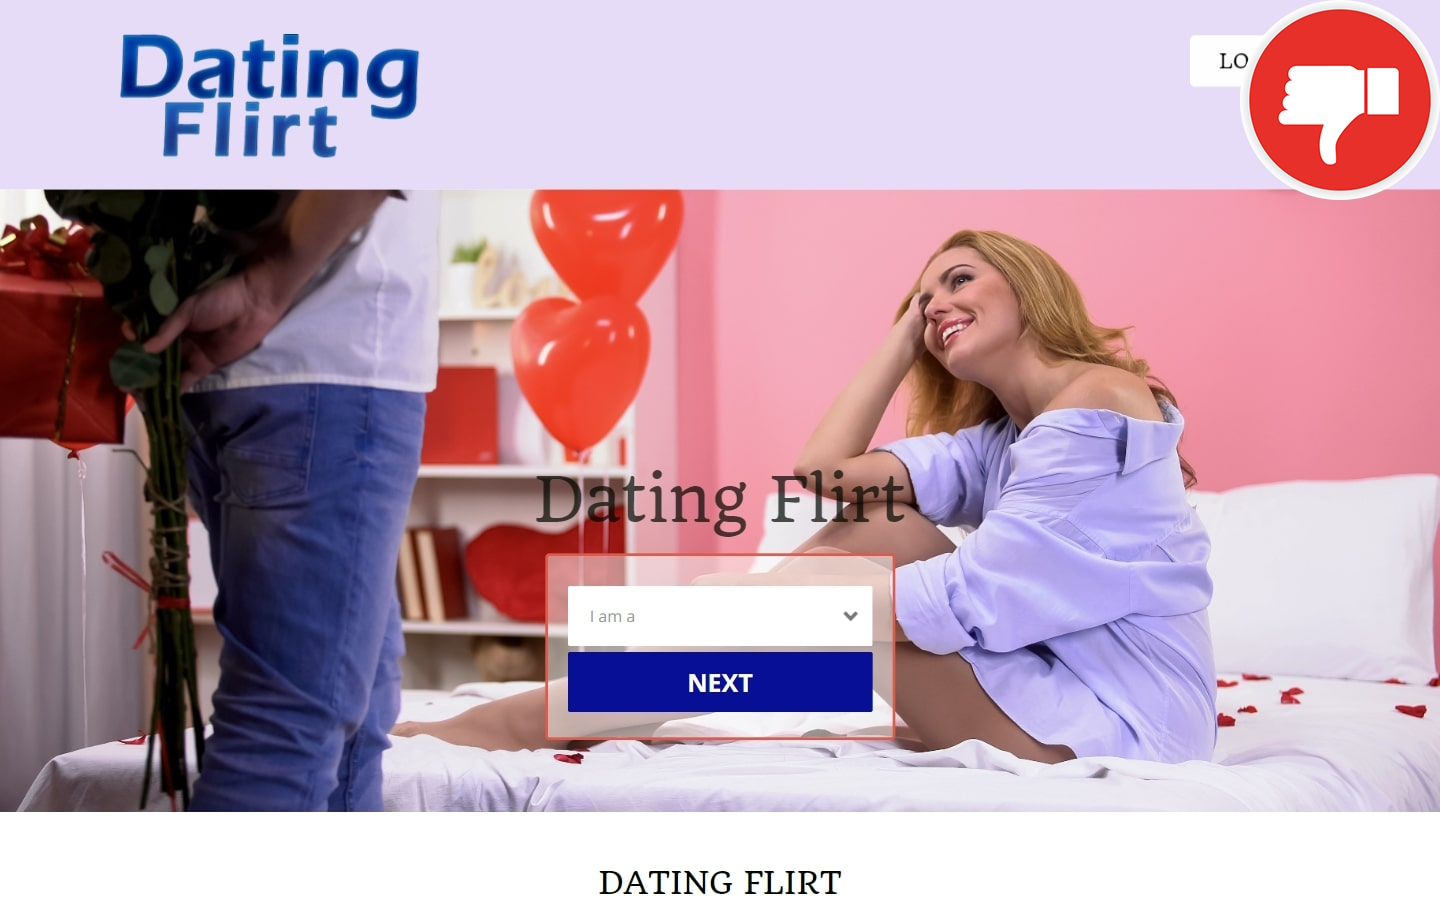 Review DatingFlirt.co.uk Scam